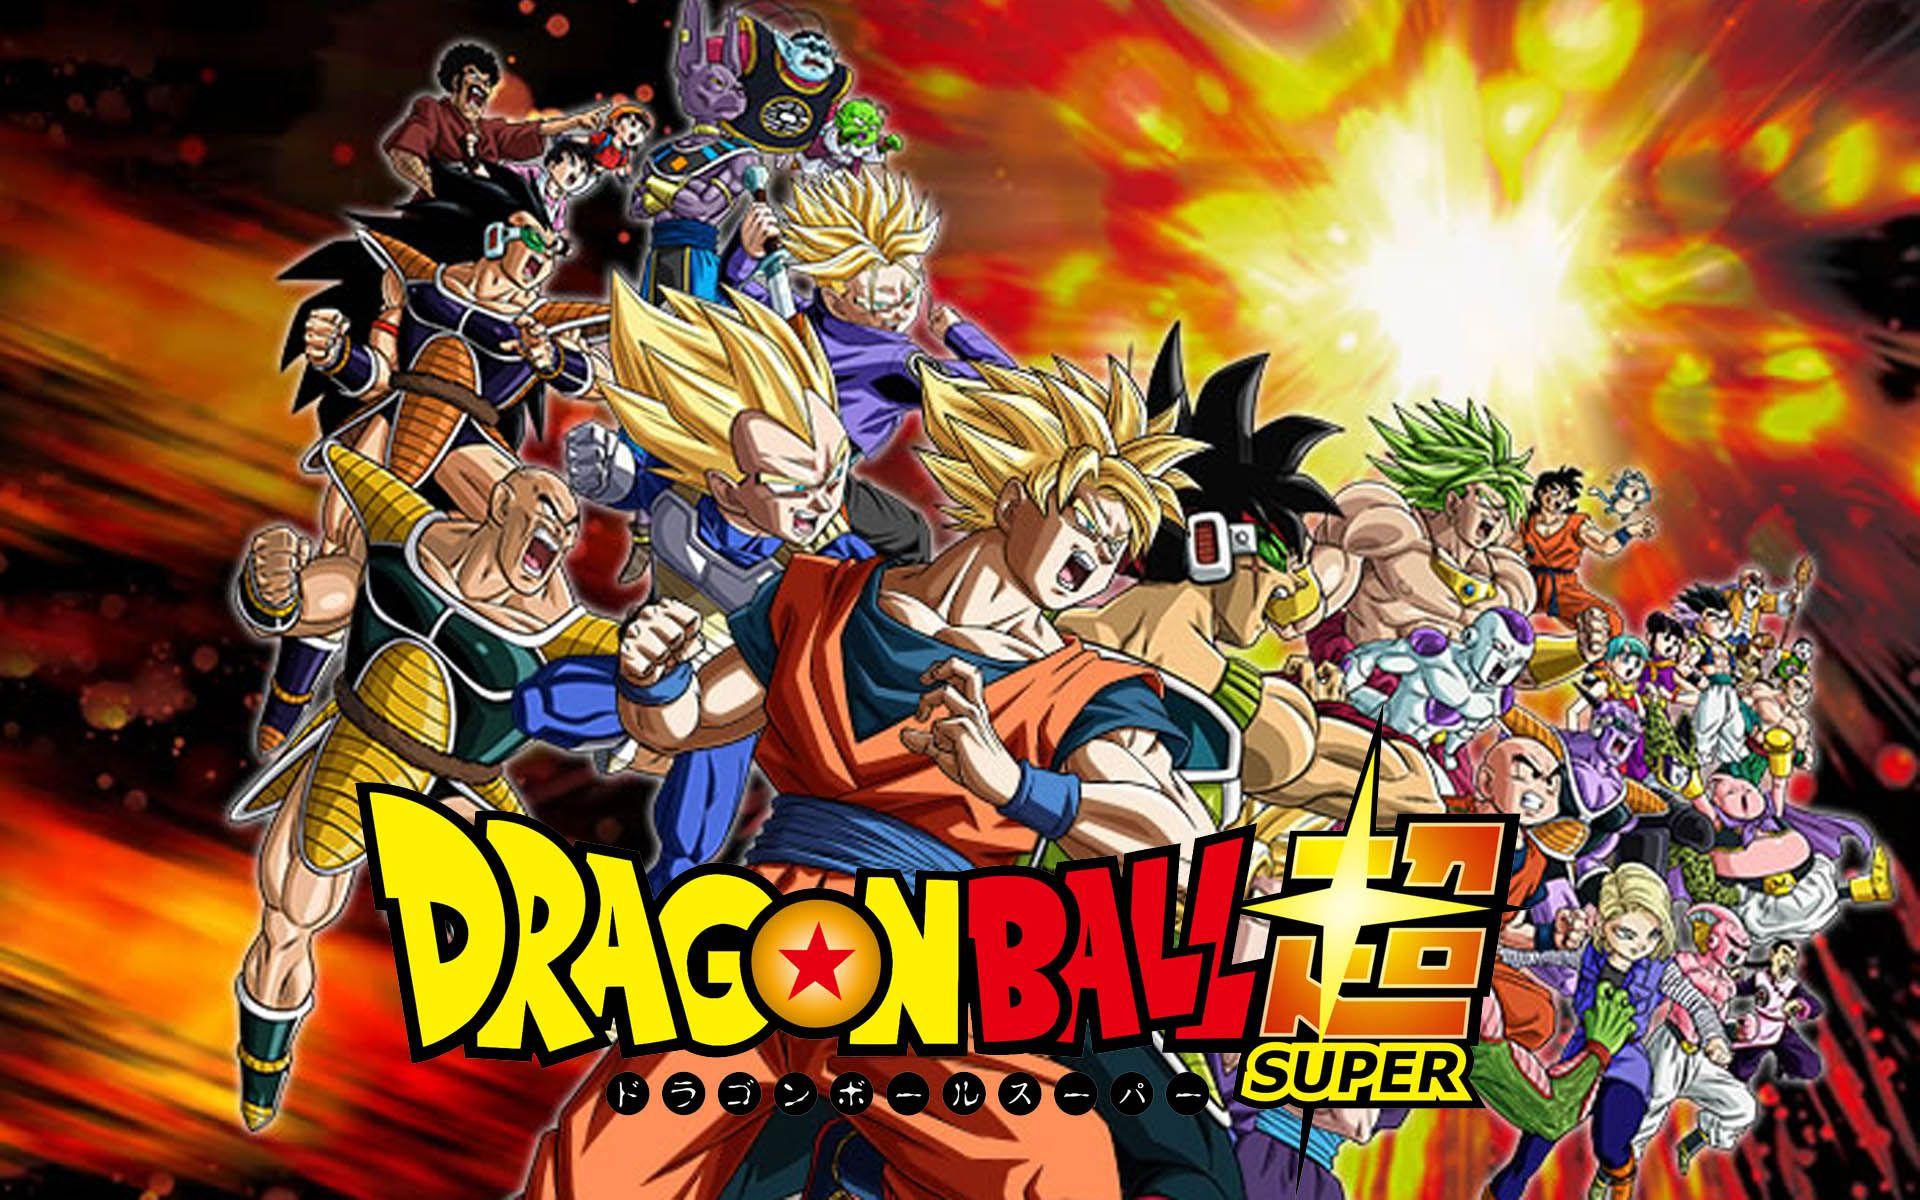 Dragon Ball Super Super Hero Wallpapers - Top 30 Best Dragon Ball